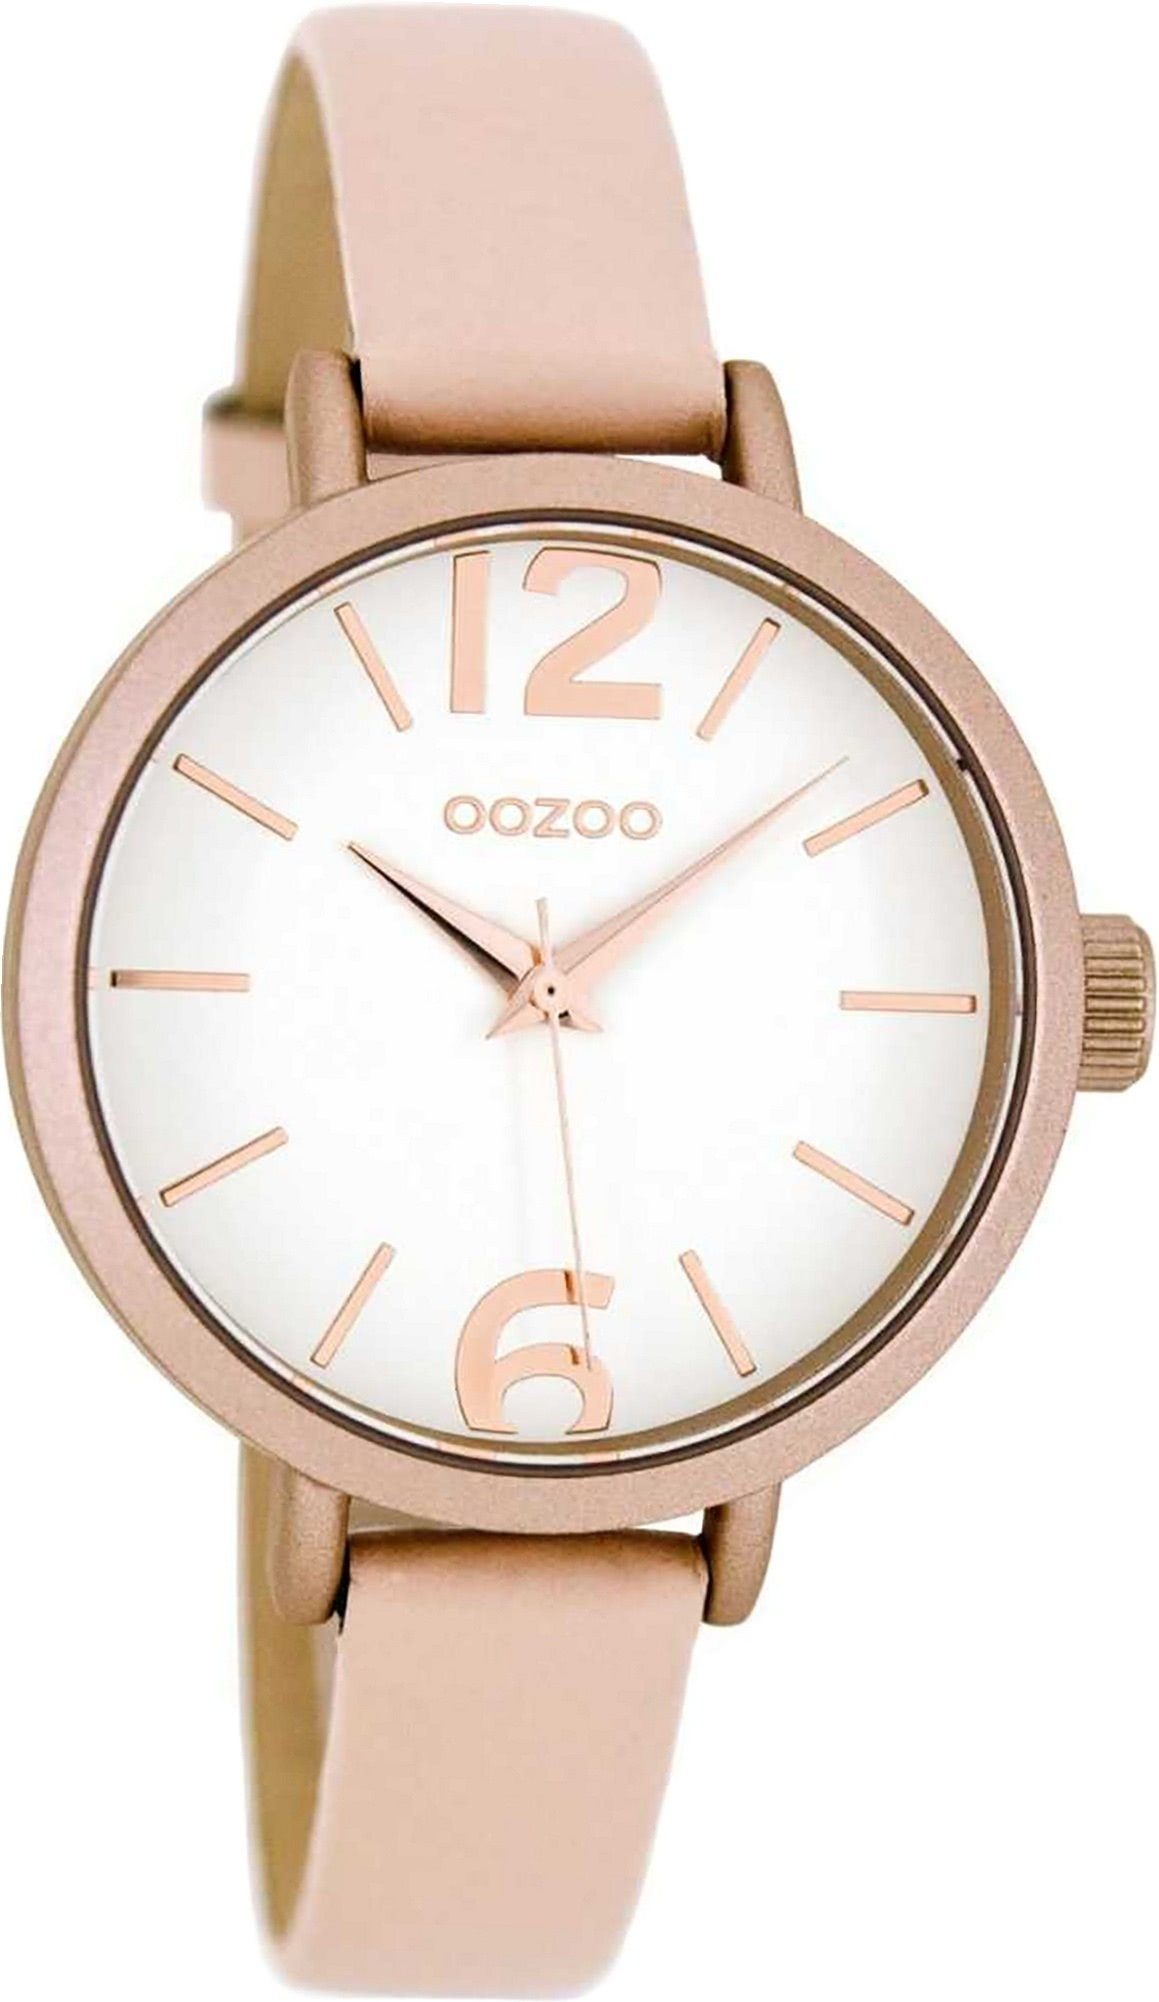 Damen Uhren OOZOO Quarzuhr D2UOC8407 Oozoo Leder Damen Uhr C8407 Analog, Damenuhr mit Lederarmband, rundes Gehäuse, mittel (ca. 